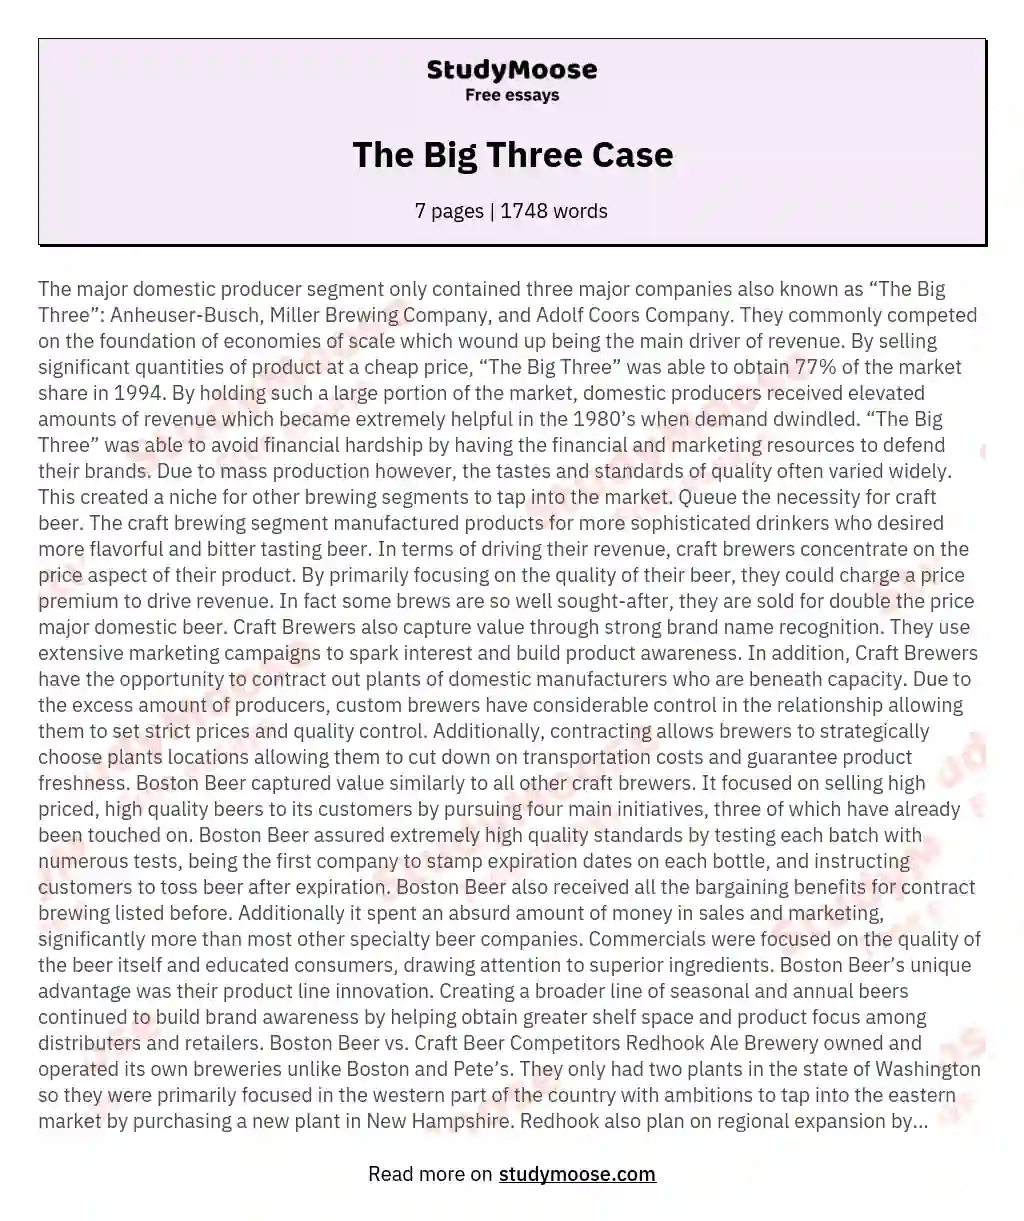 The Big Three Case essay